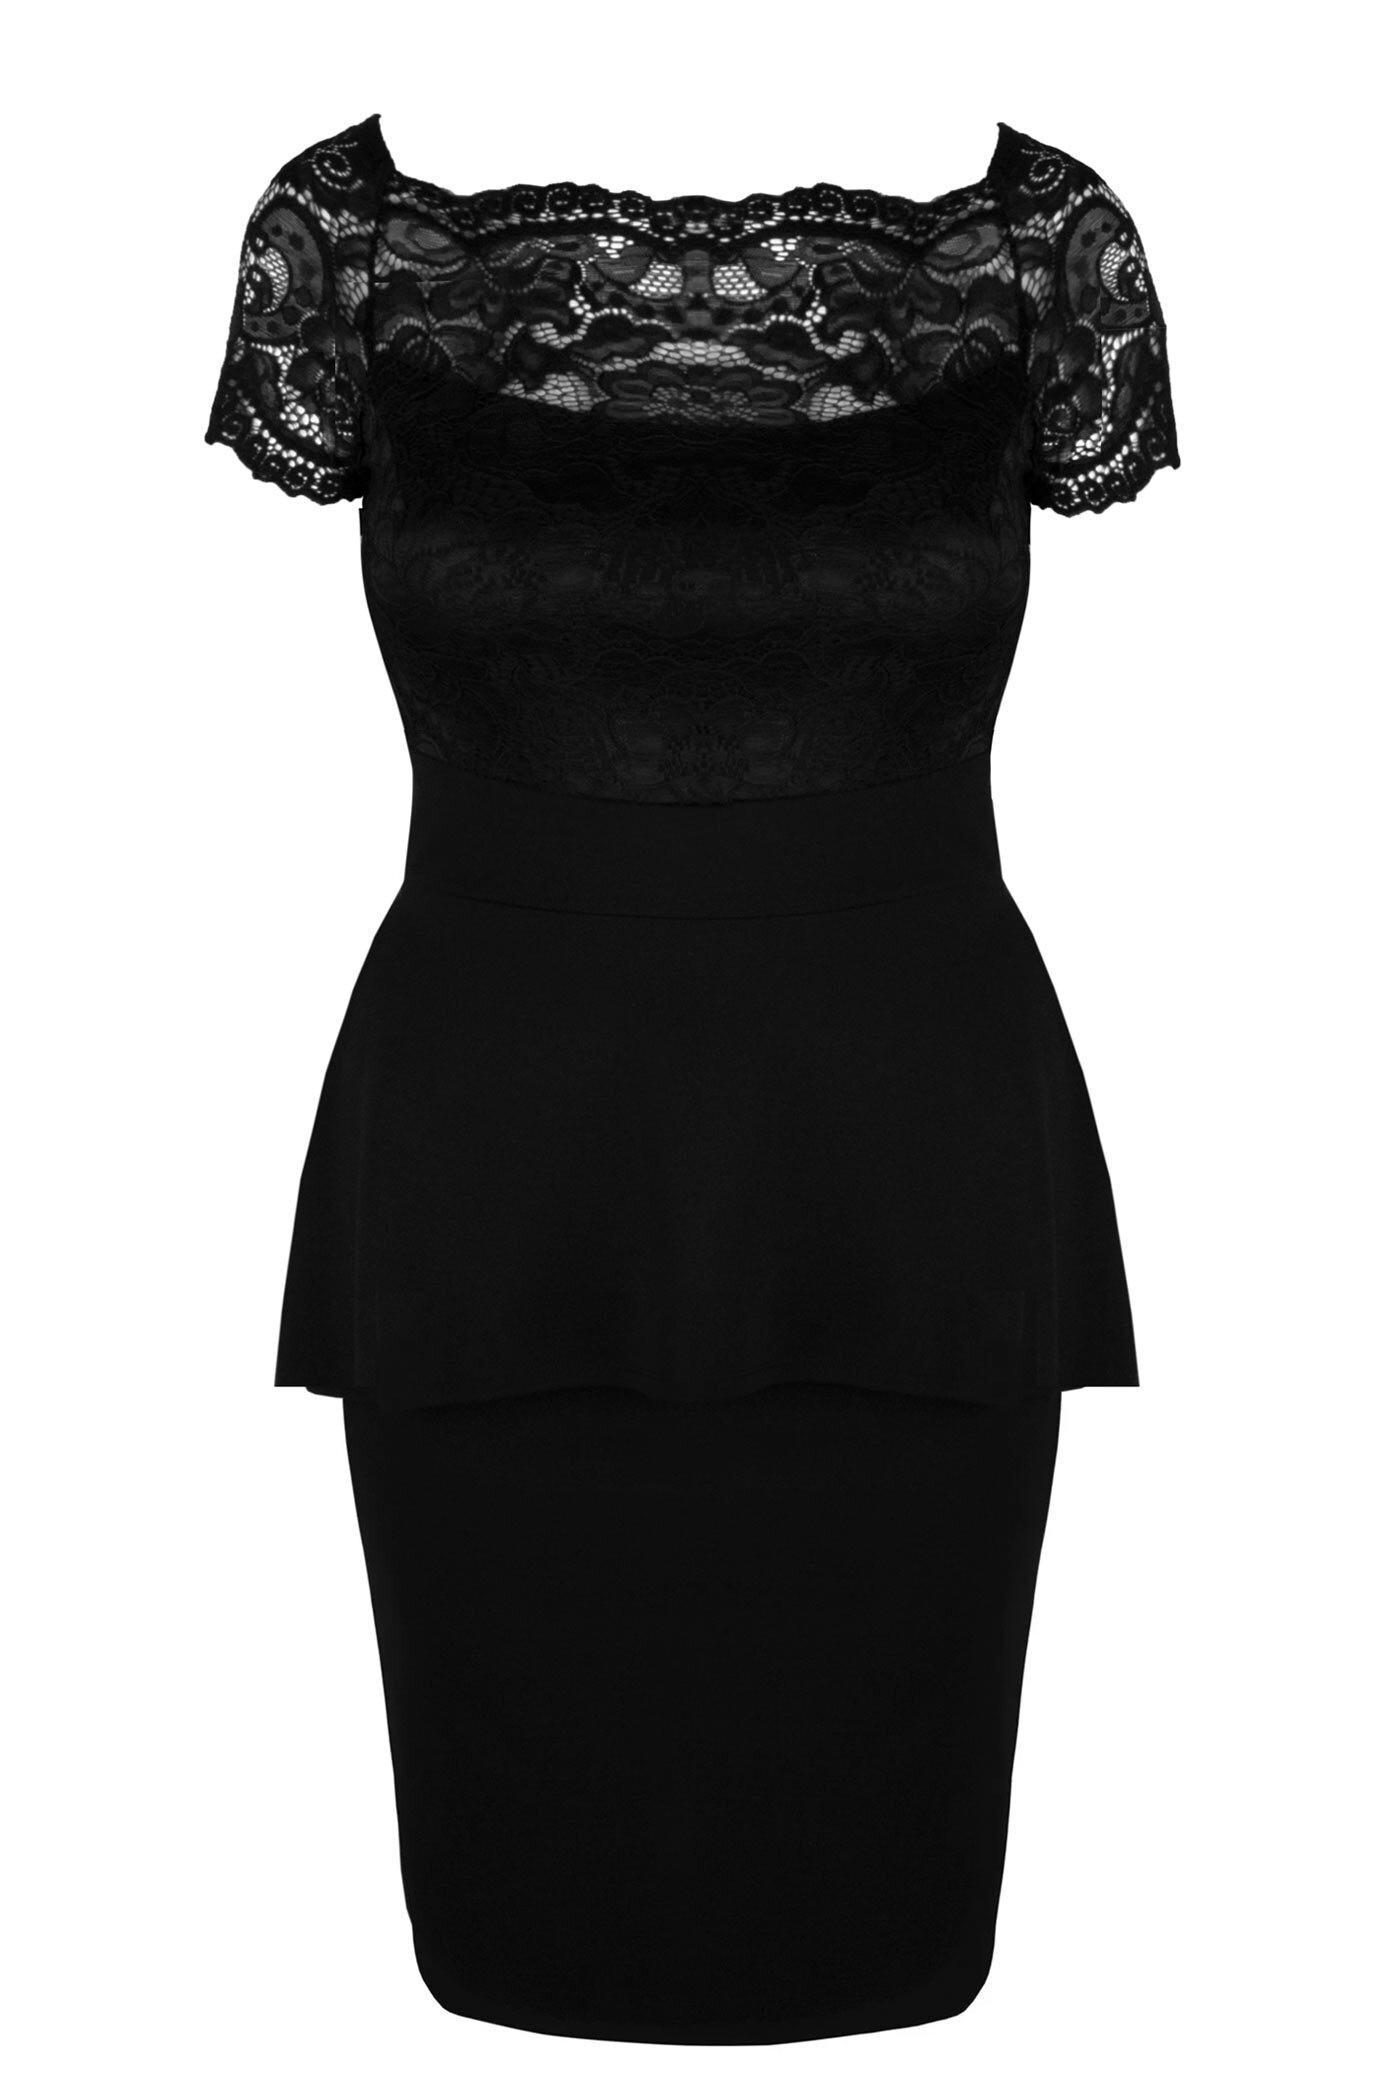 HELLEN BLACK elegancka koronkowa sukienka plus size